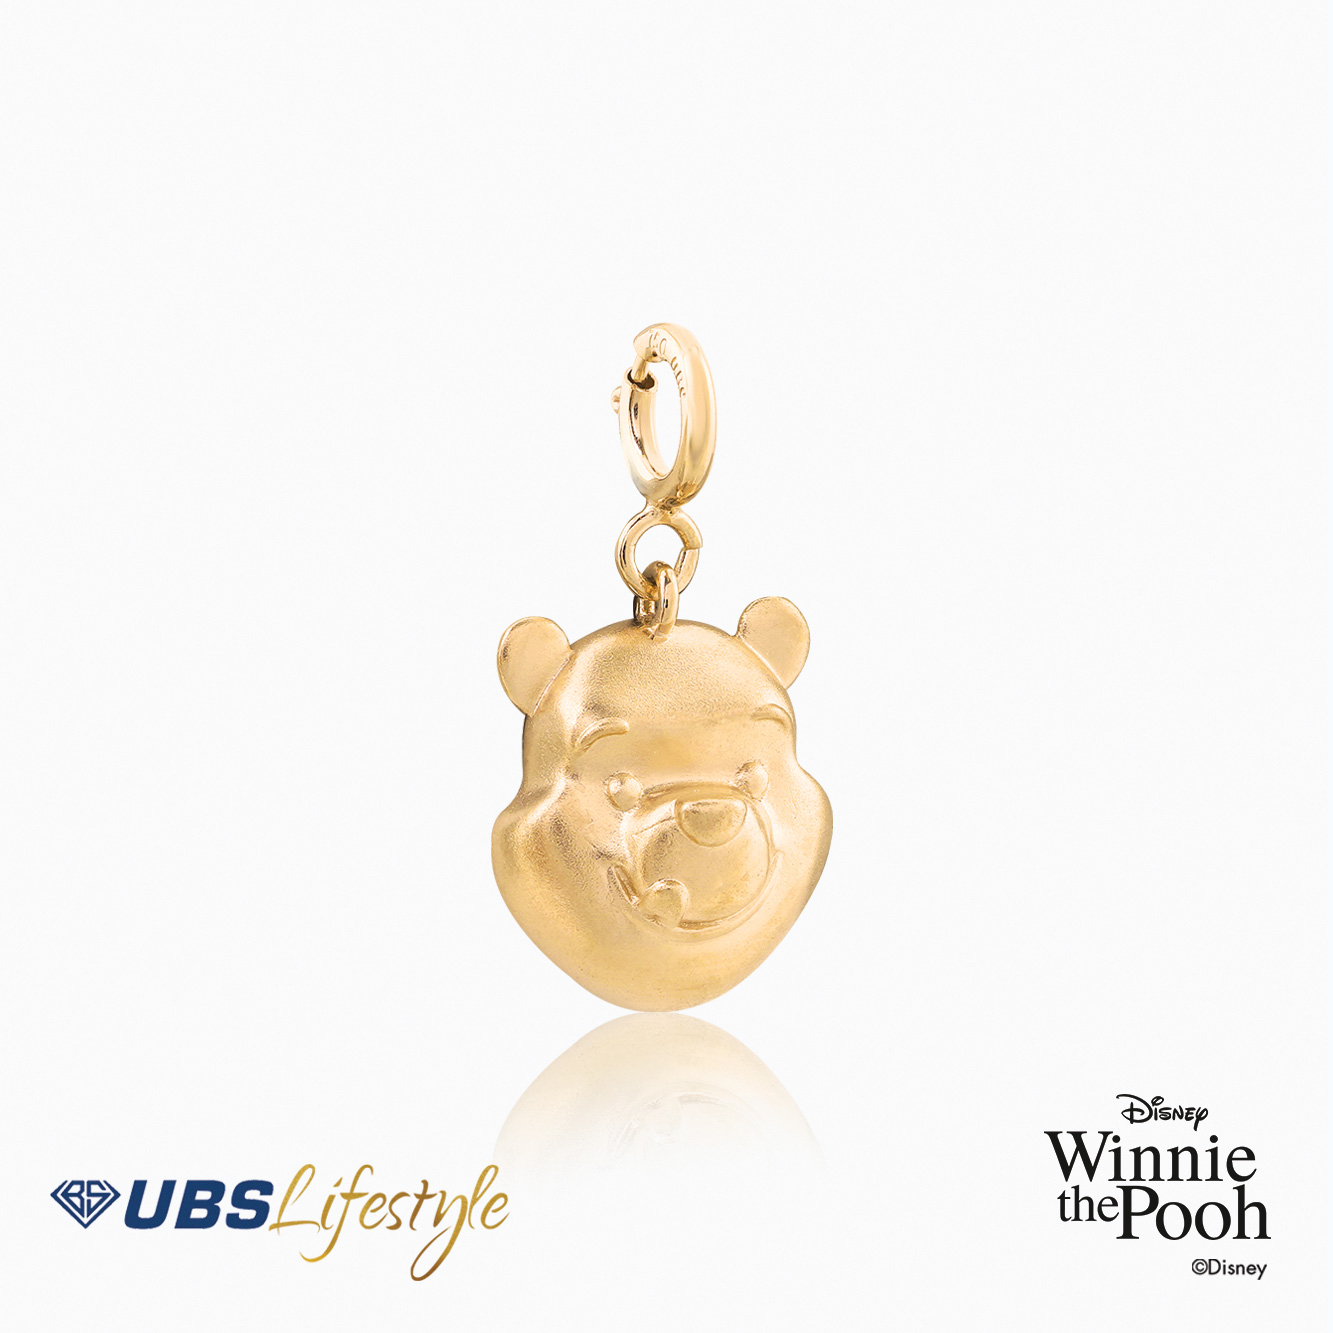 UBS Liontin Emas Disney Winnie The Pooh - Cmy0110 - 17K